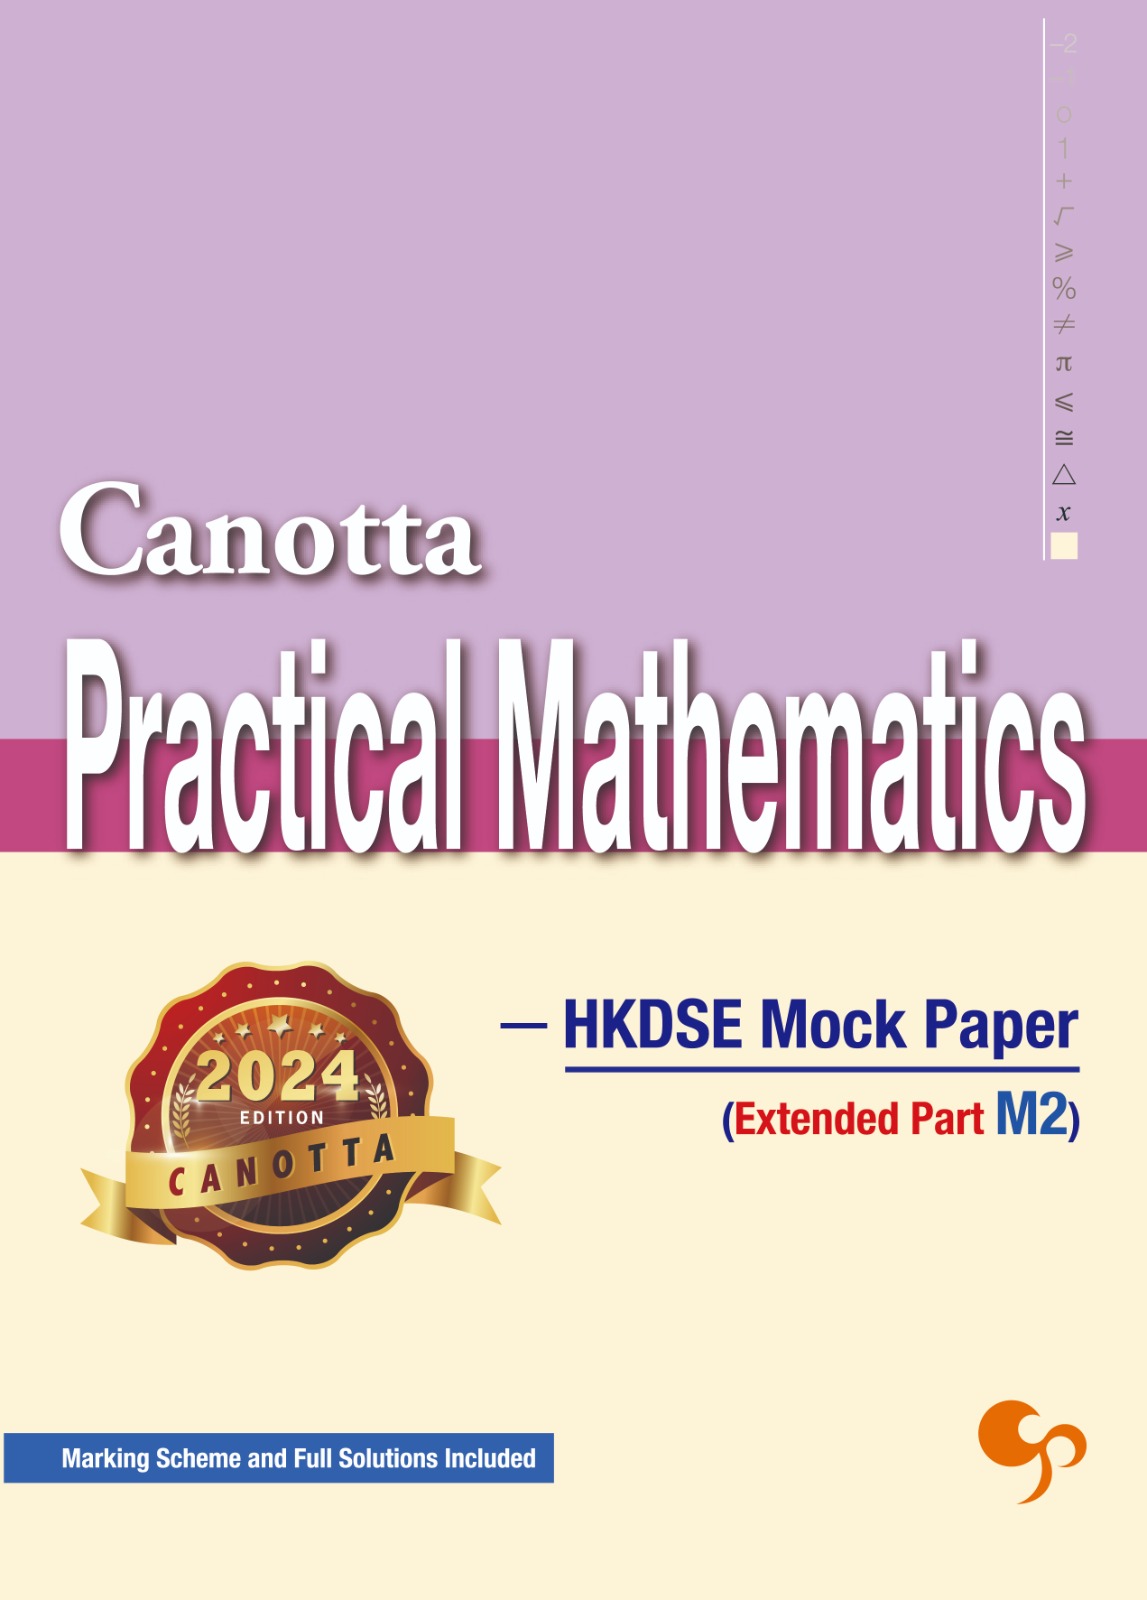 Canotta Practical Mathematics HKDSE Mock Paper (Extended Part M2